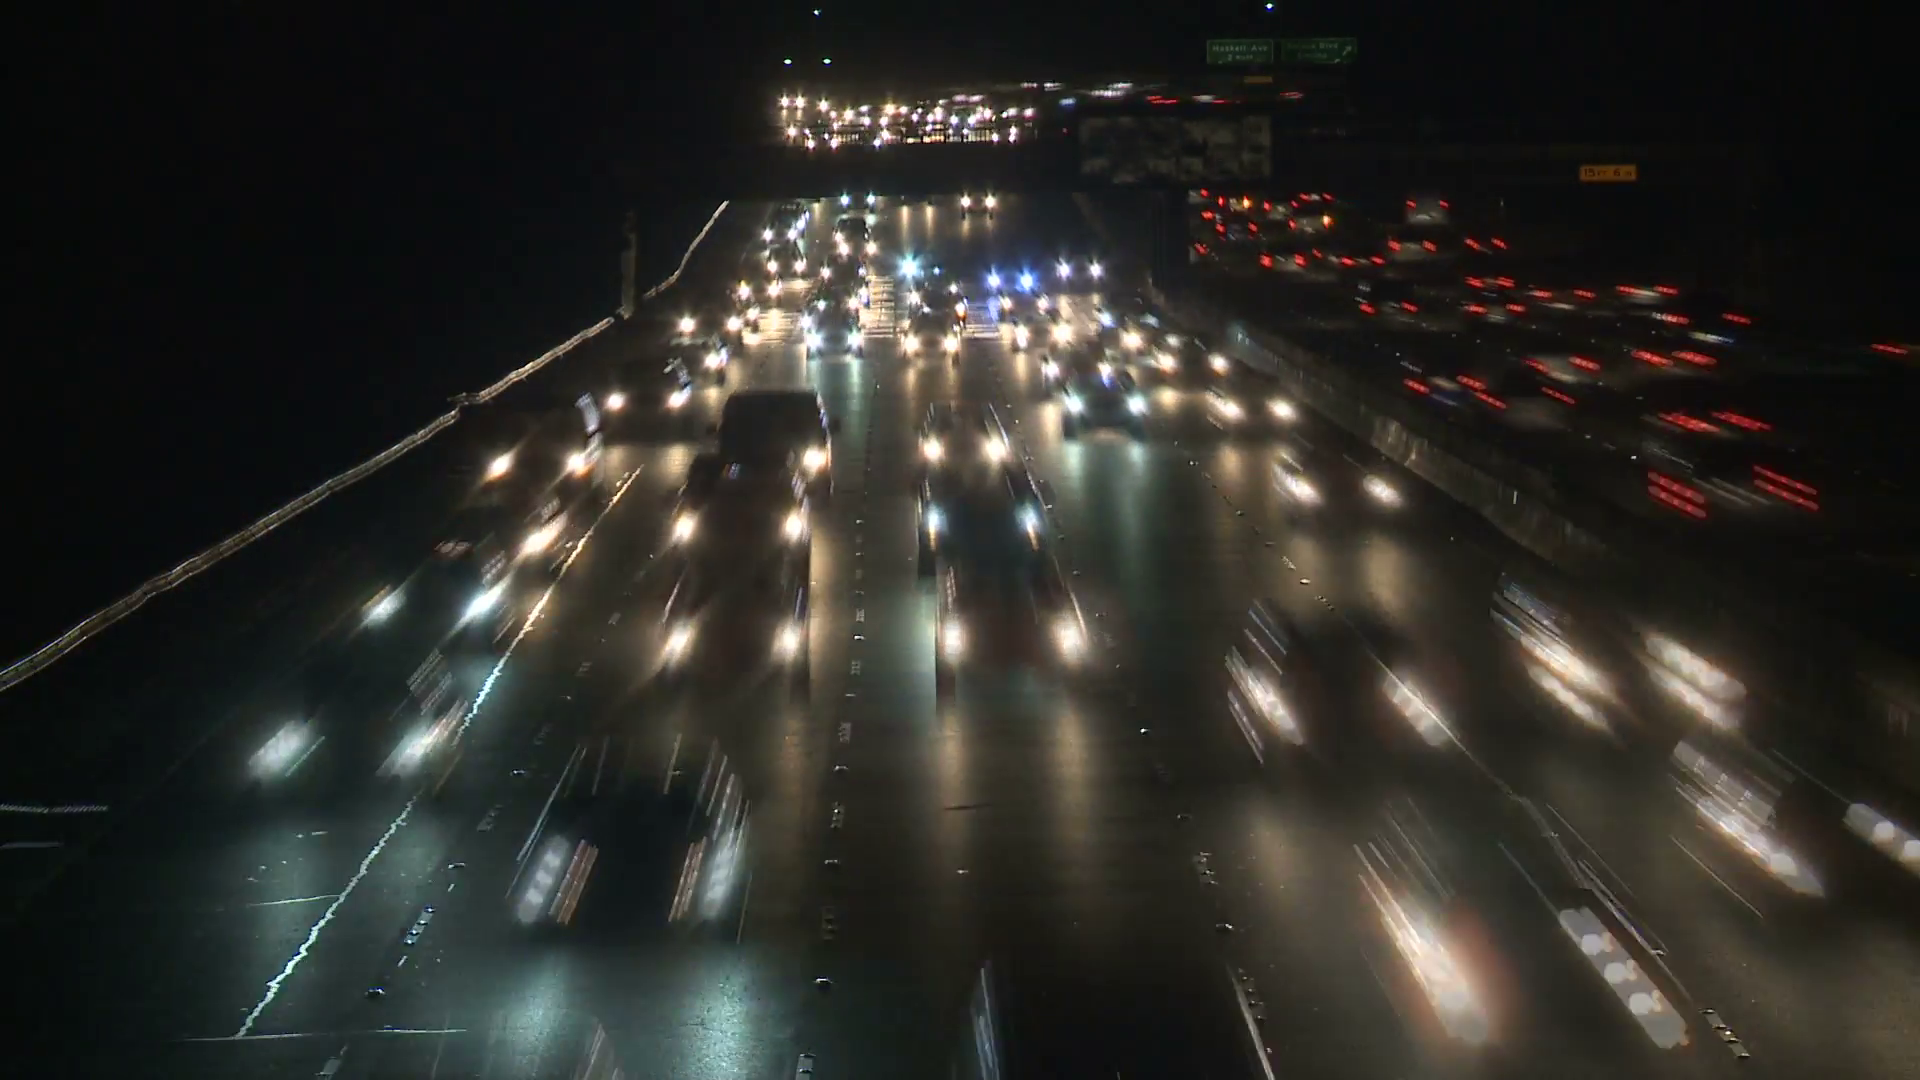 Nighttime speeding photo